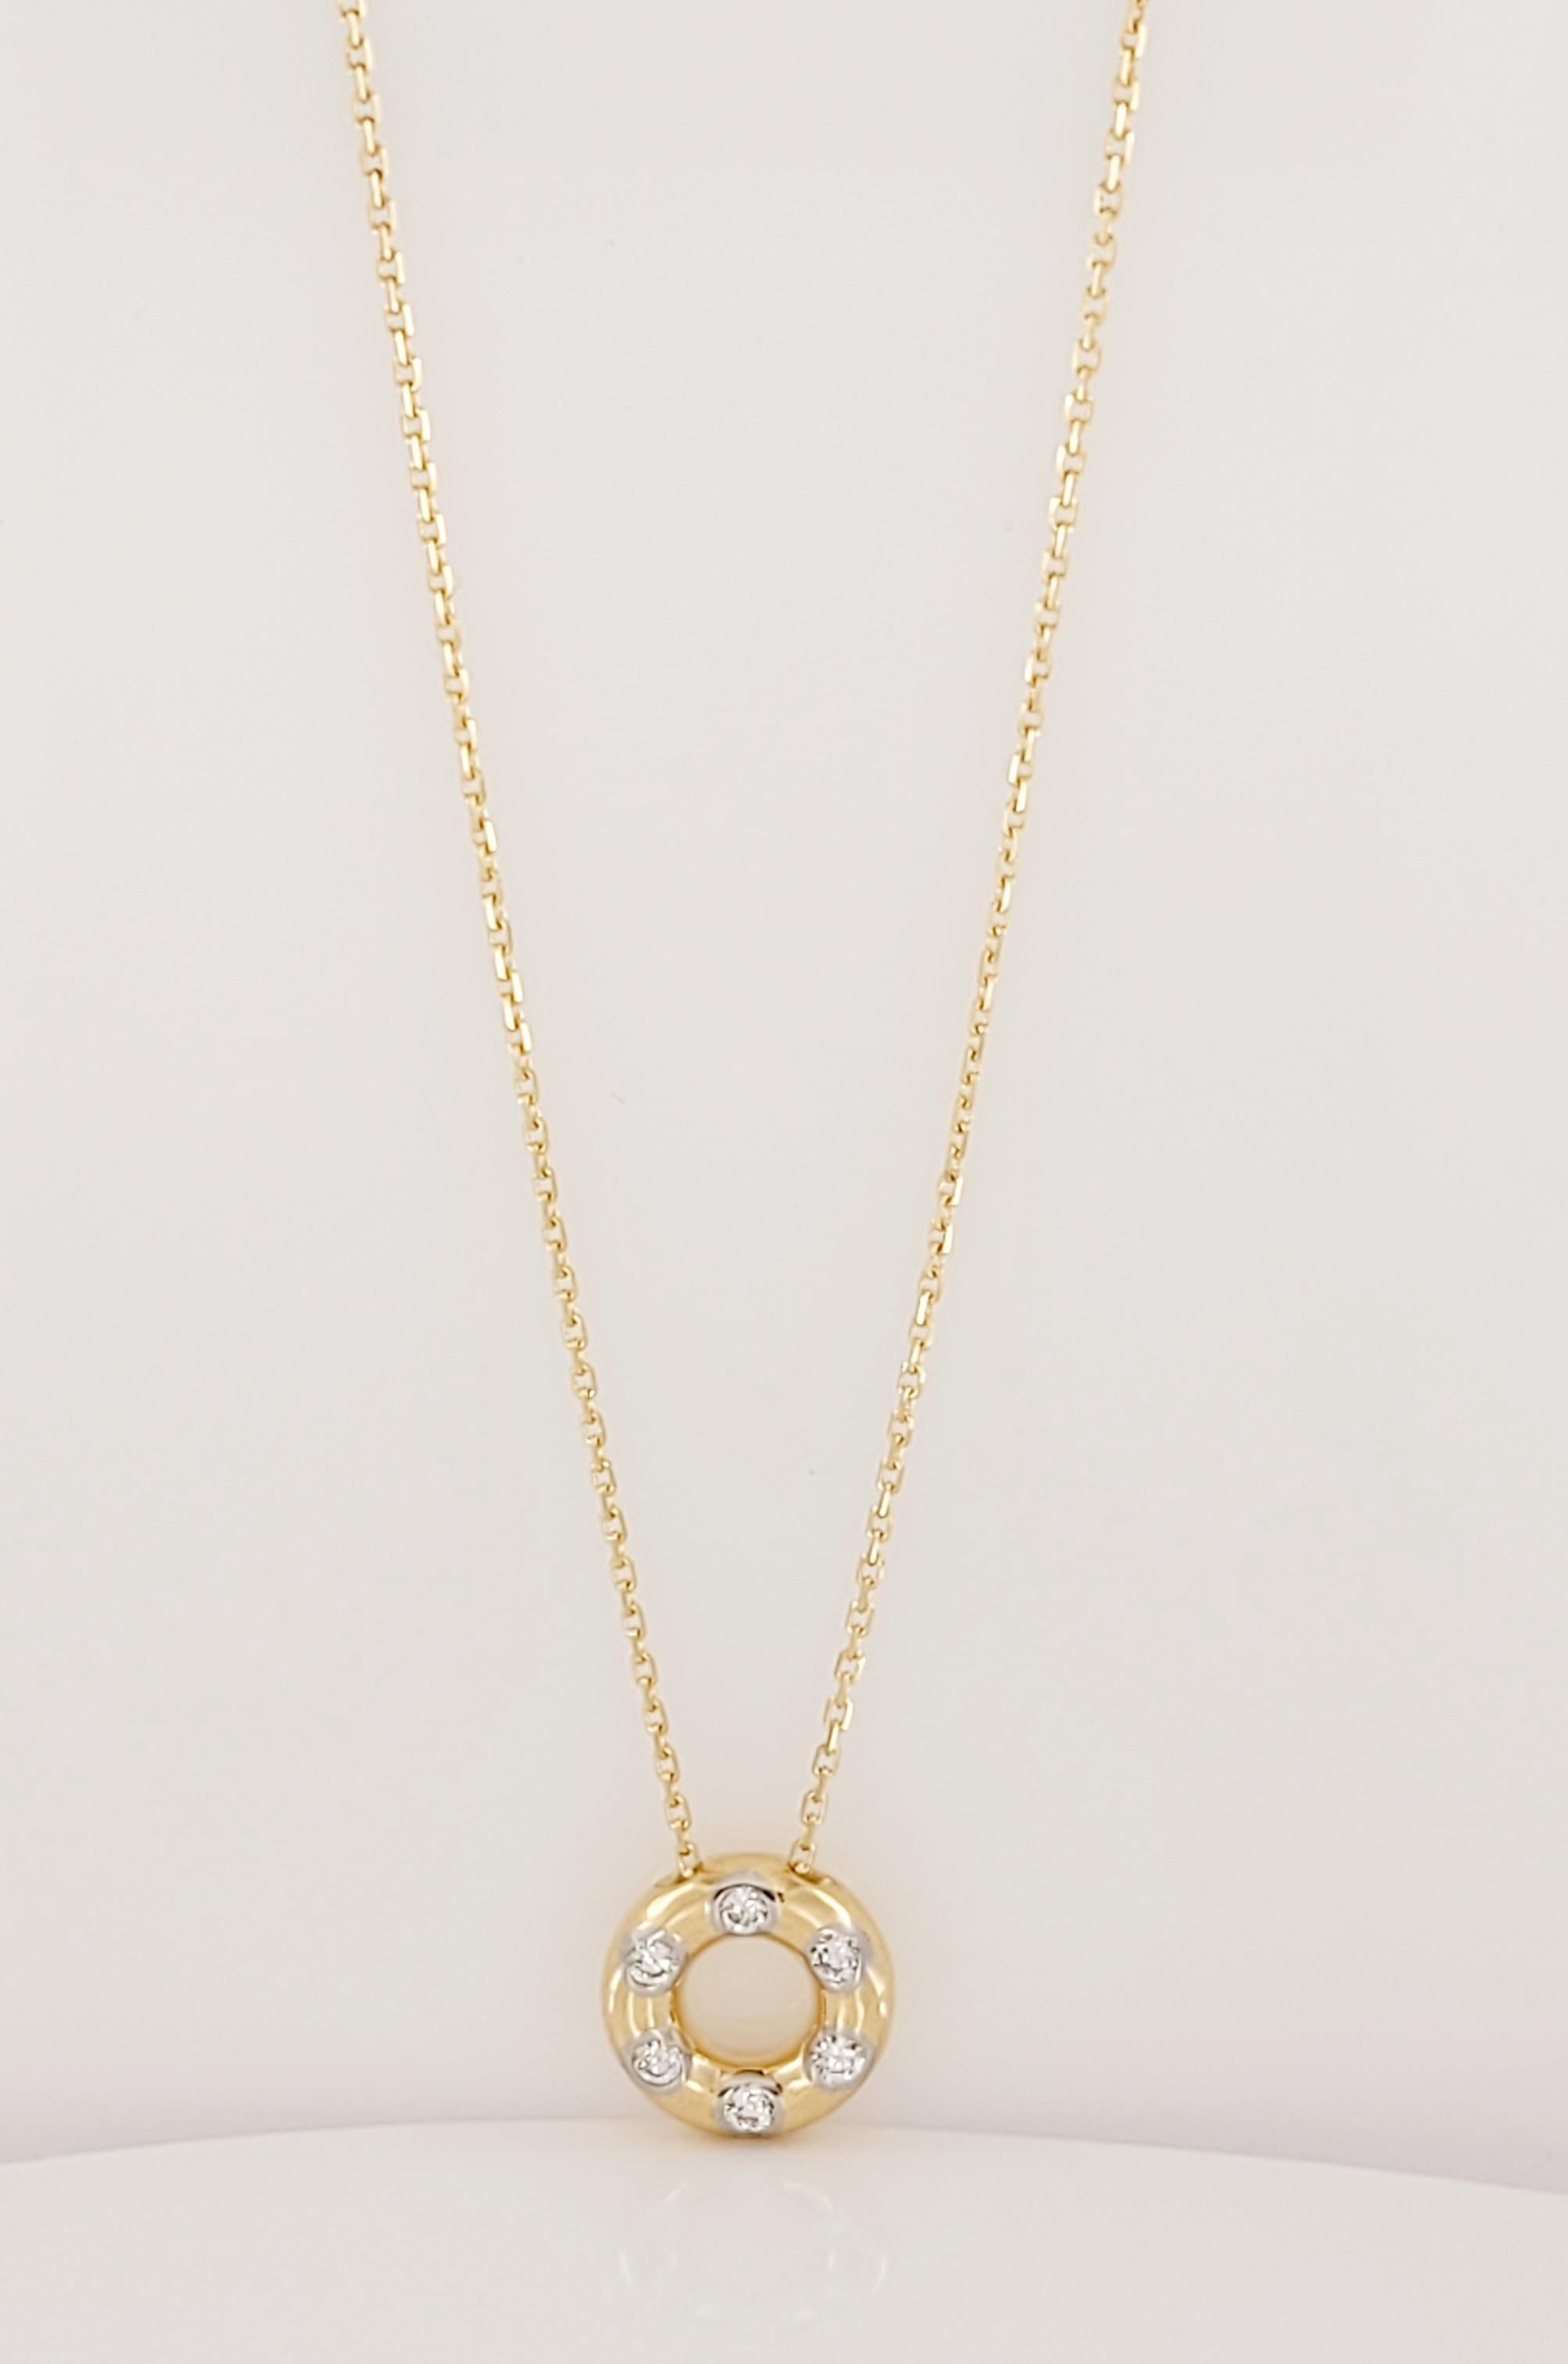 Tiffany &Co Etoile Pendant Necklace
Metal 18K Yellow Gold 
Weight 6.4gr 
Chain 16'' Long
Pendant:12.3mm in Diameter
Diamond 6 round brilliant diamonds, carat total weight .18
Diamond Clarity VS. Color Grade E-F 
Hallmark: 